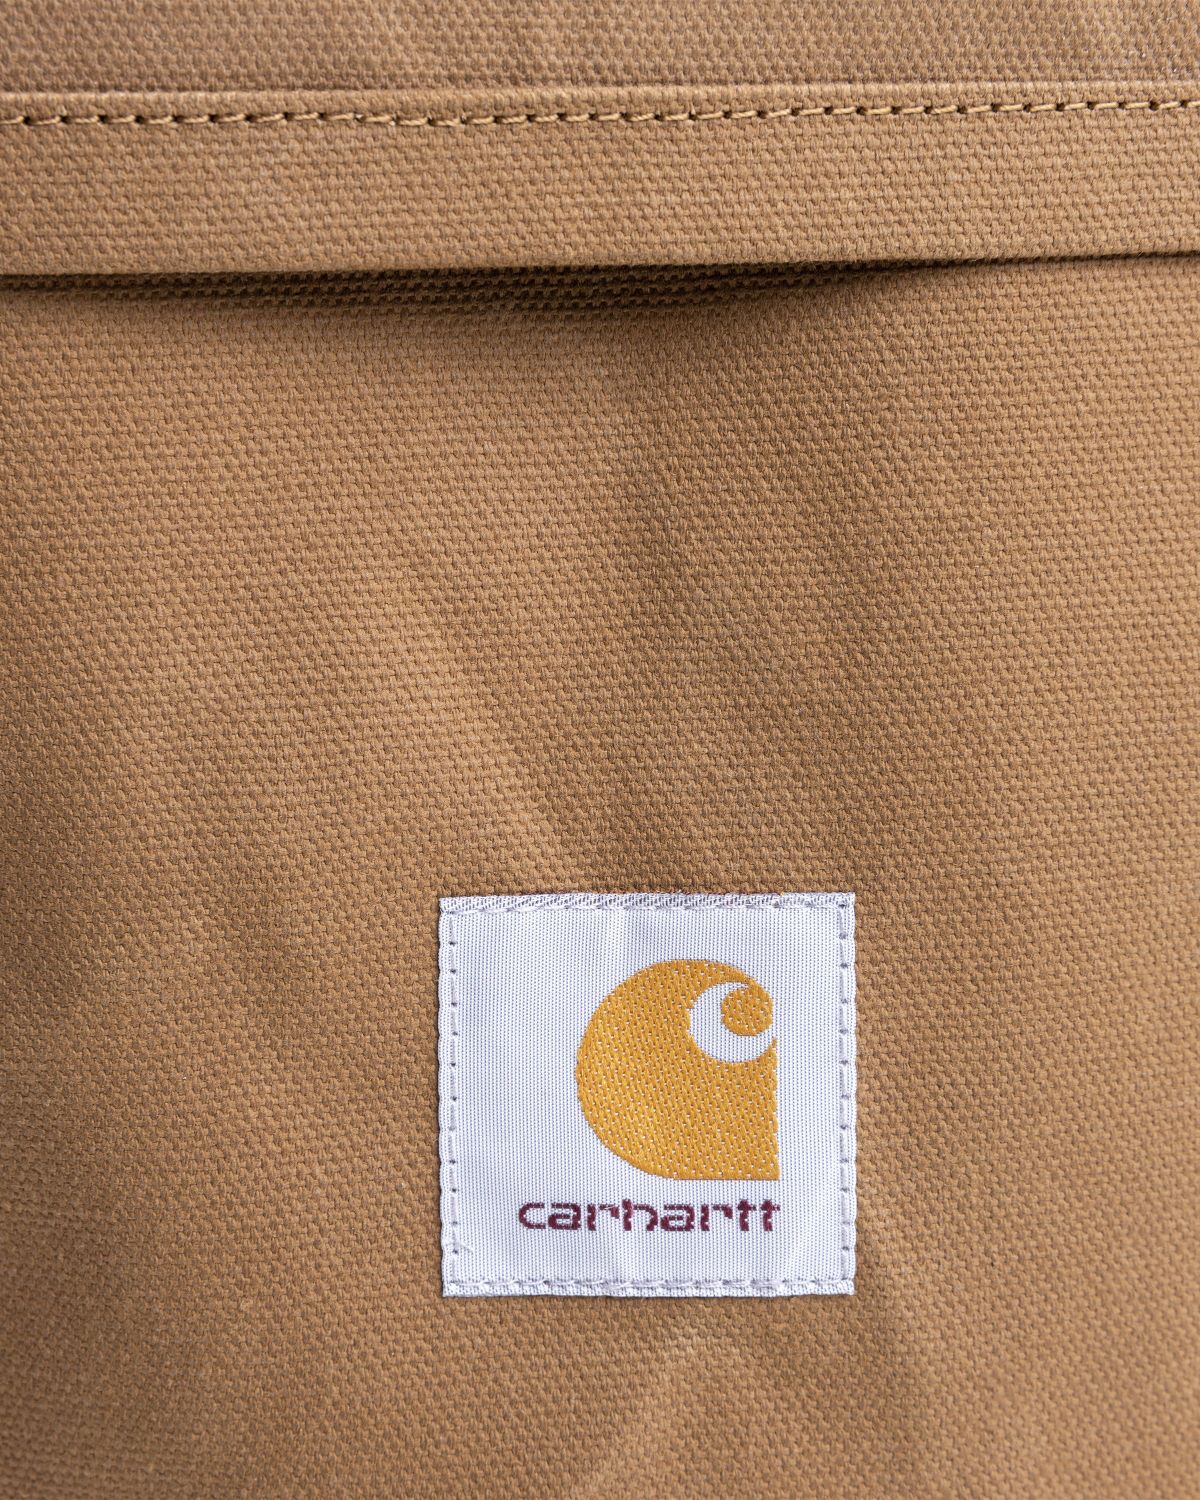 Carhartt WIP – Canvas Planter Set Hamilton Brown | Highsnobiety Shop